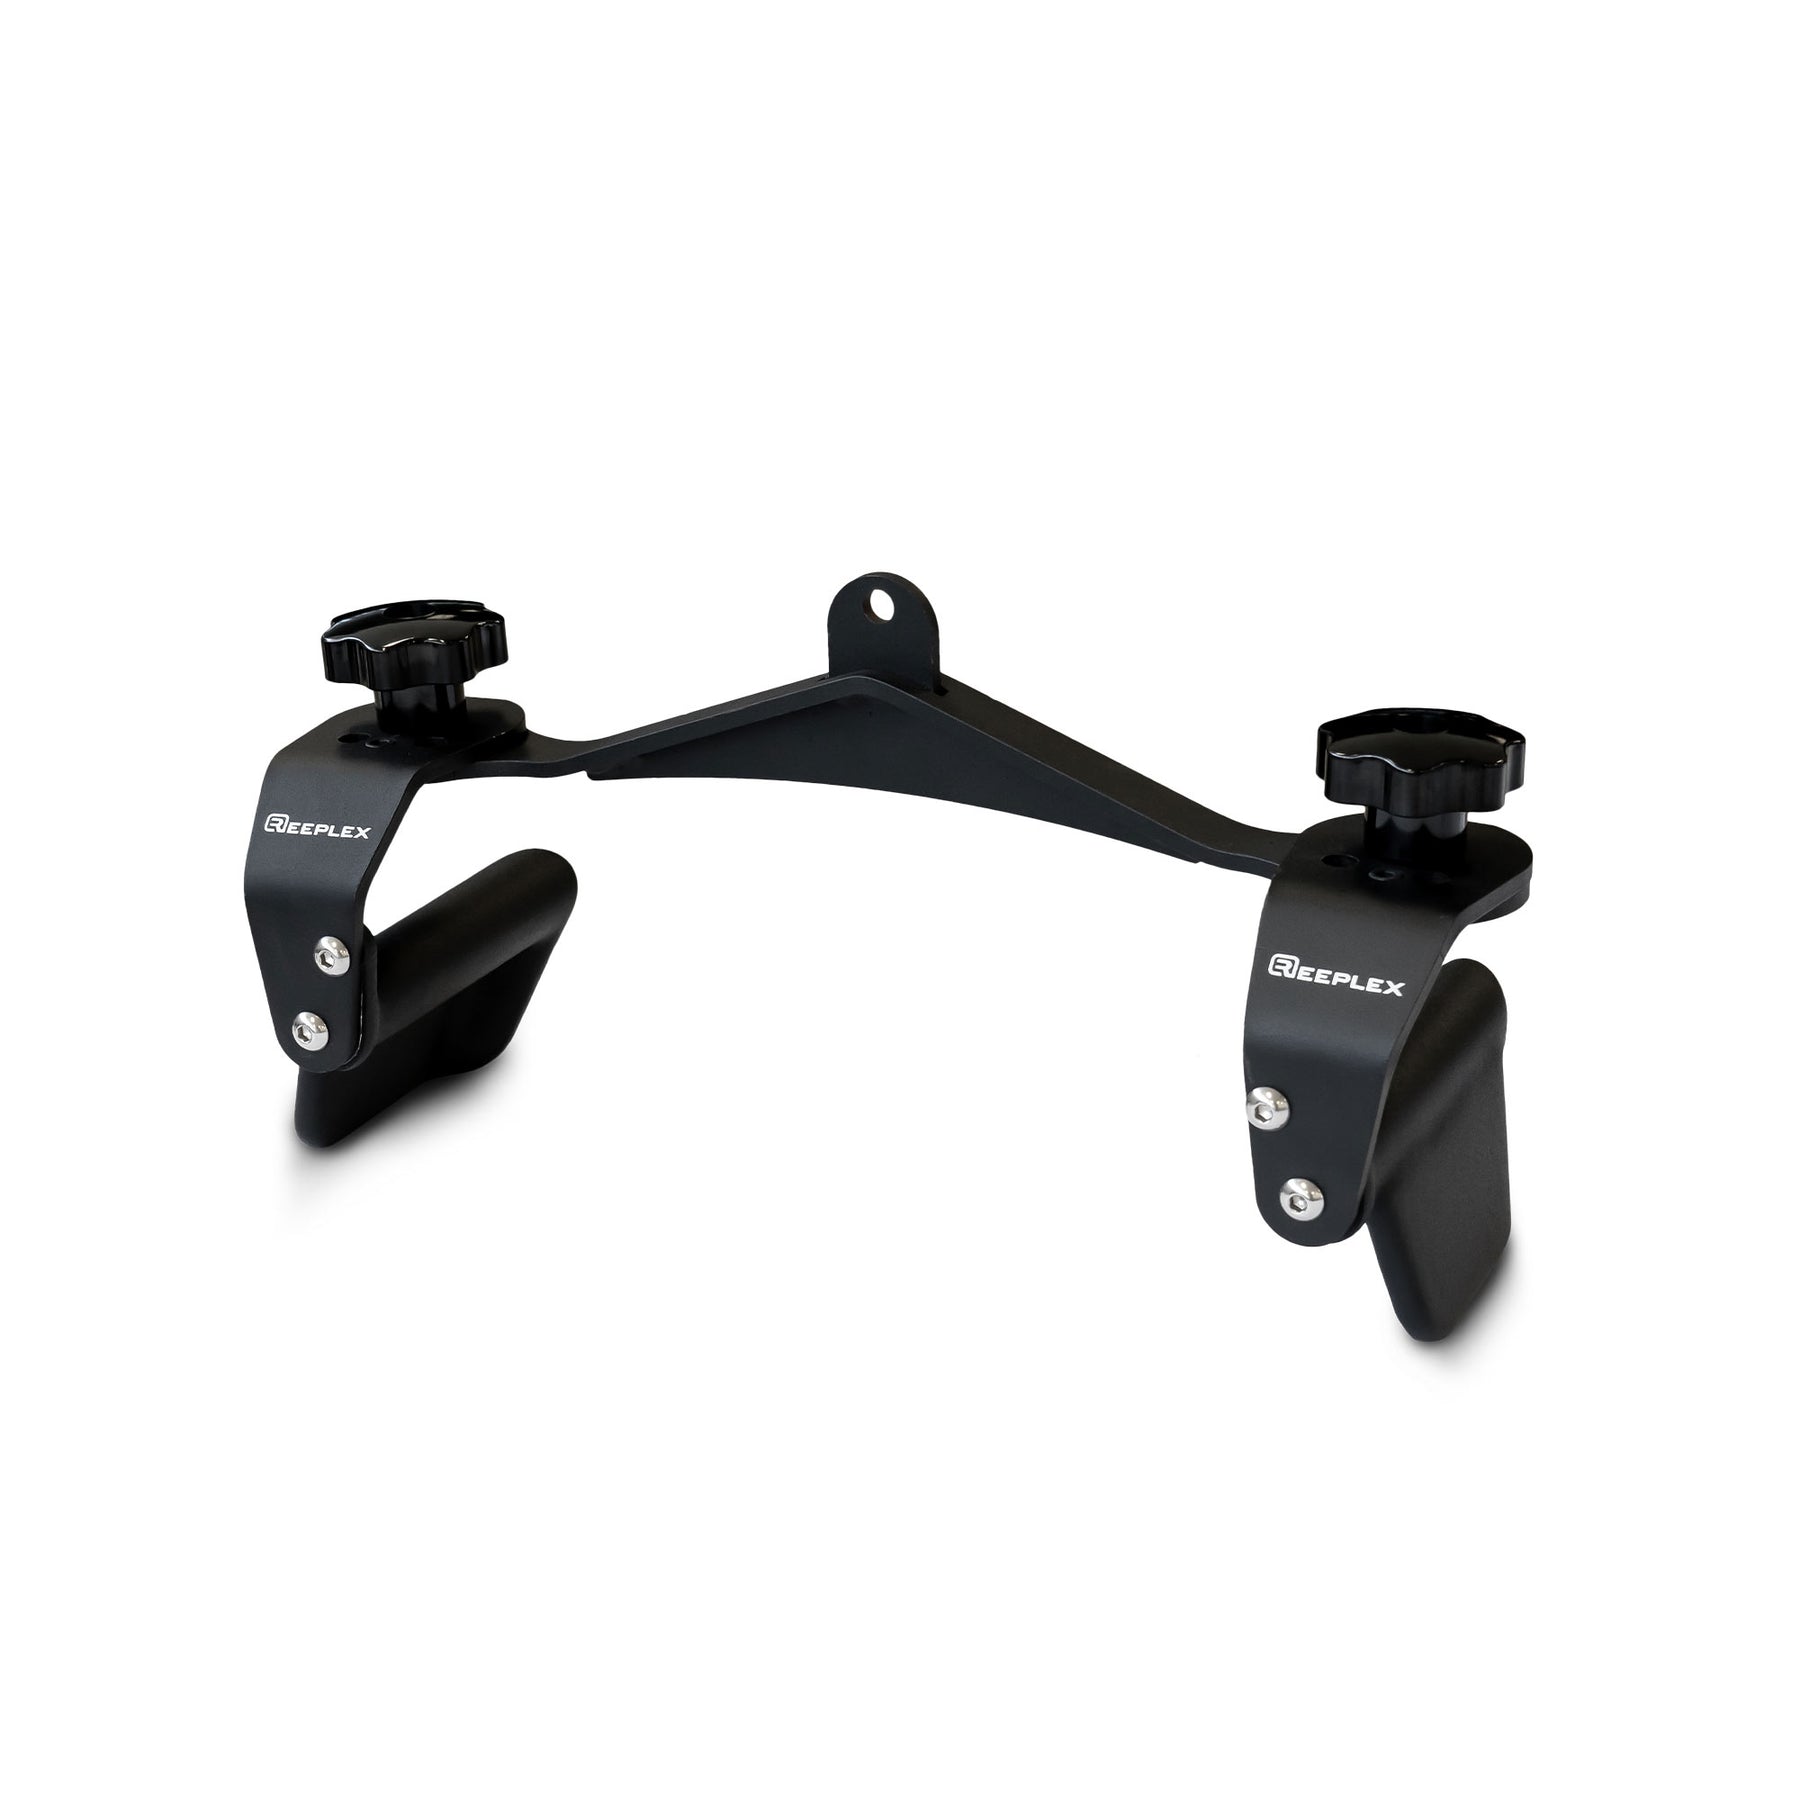 Reeplex 8 Piece Cable Attachment Set with Adjustable Neo Grip Handles